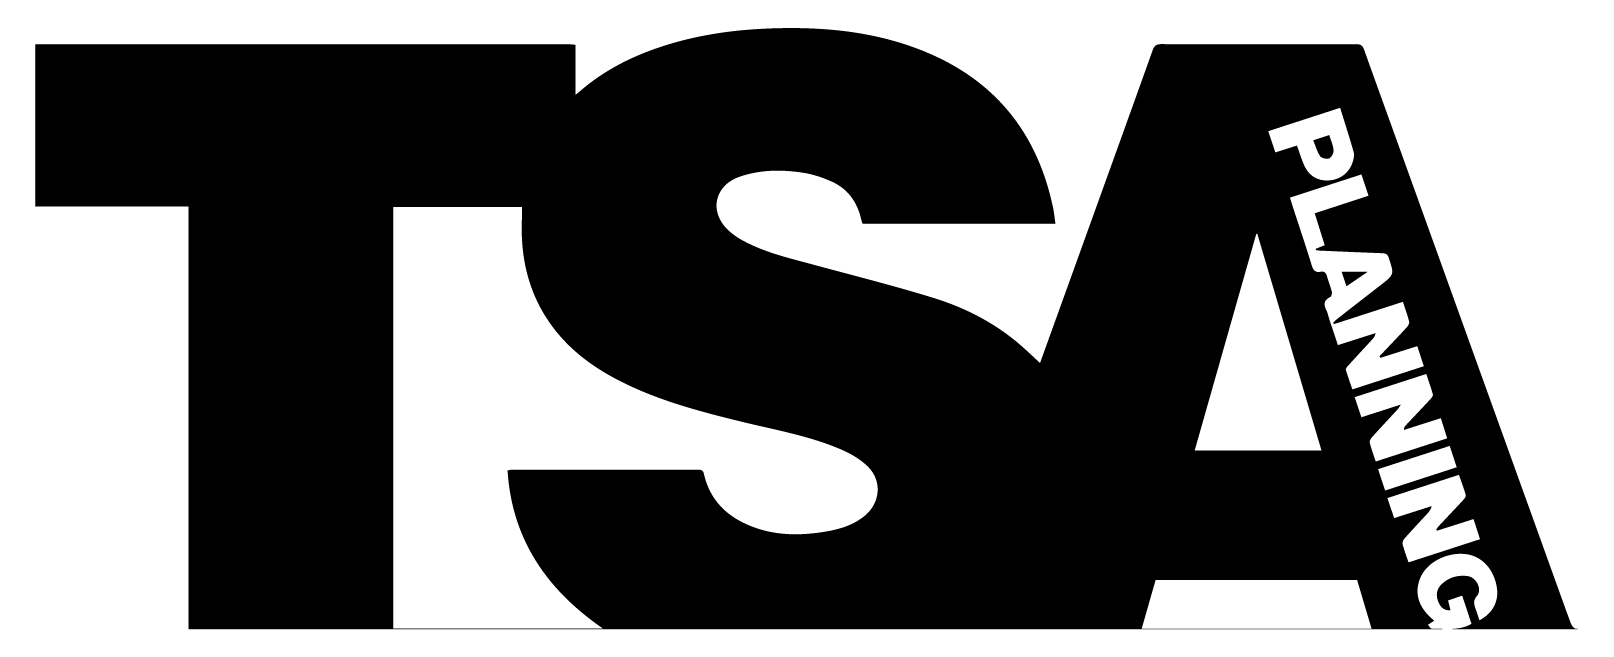 Black and White TSA Logo - About Us